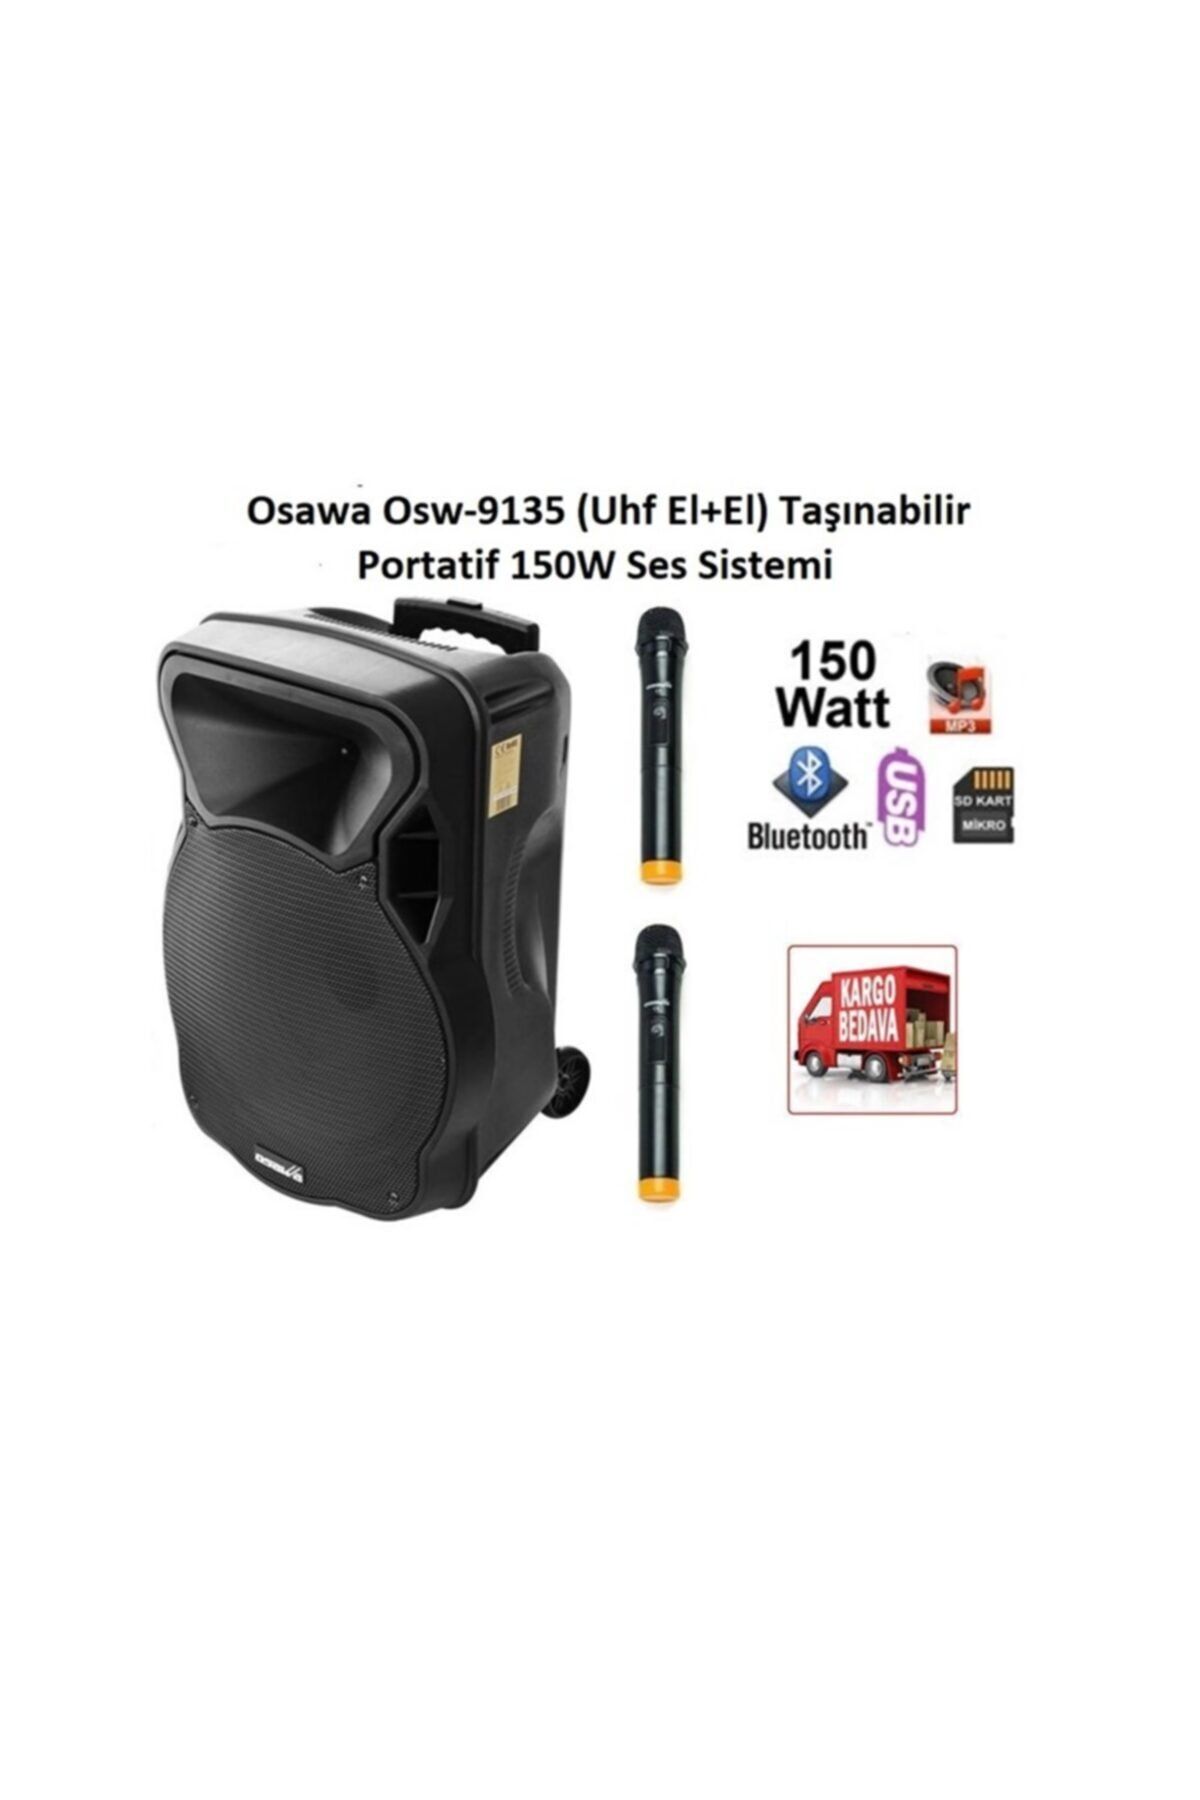 OSAWA Osw-9135 Taşınabilir Portatif Seyyar Ses Sistemi 150 Watt